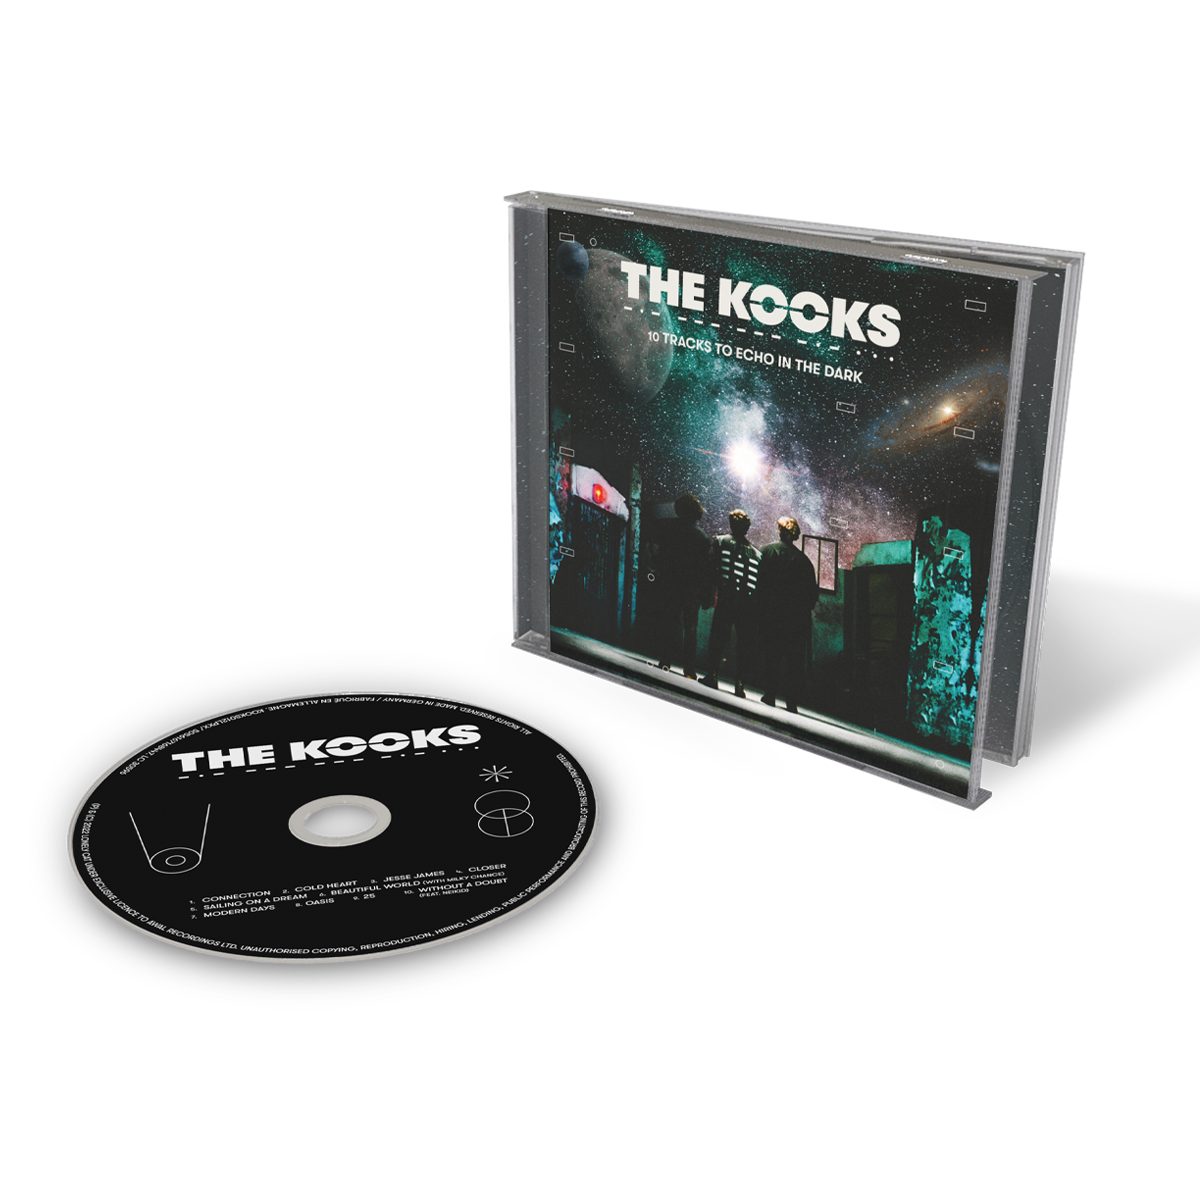 The Kooks - 10 Tracks to Echo in the Dark: CD